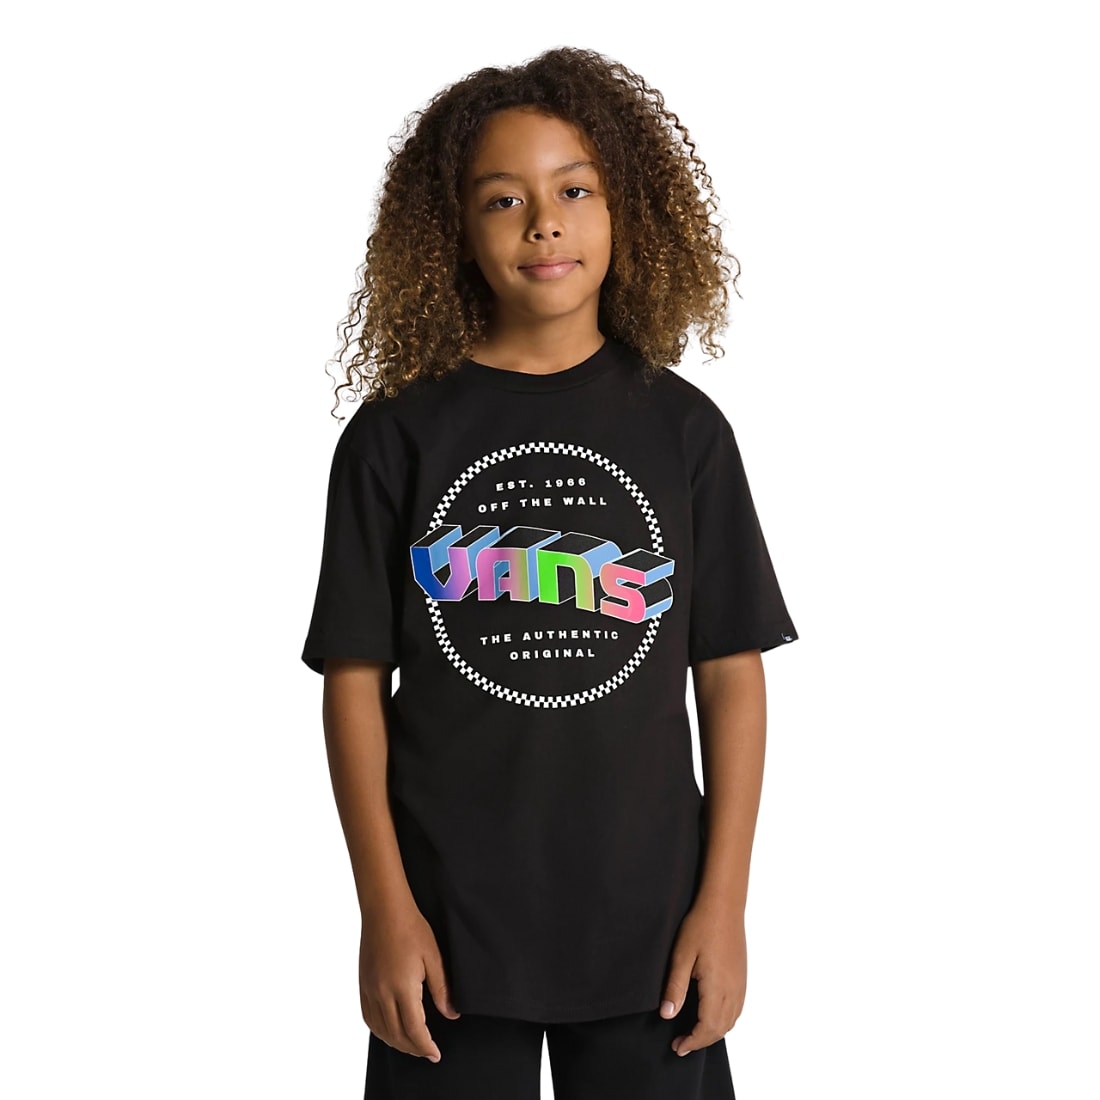 Vans Kids Digital Flash Boys T-Shirt - Black - Boys Surf Brand T-Shirt by Vans